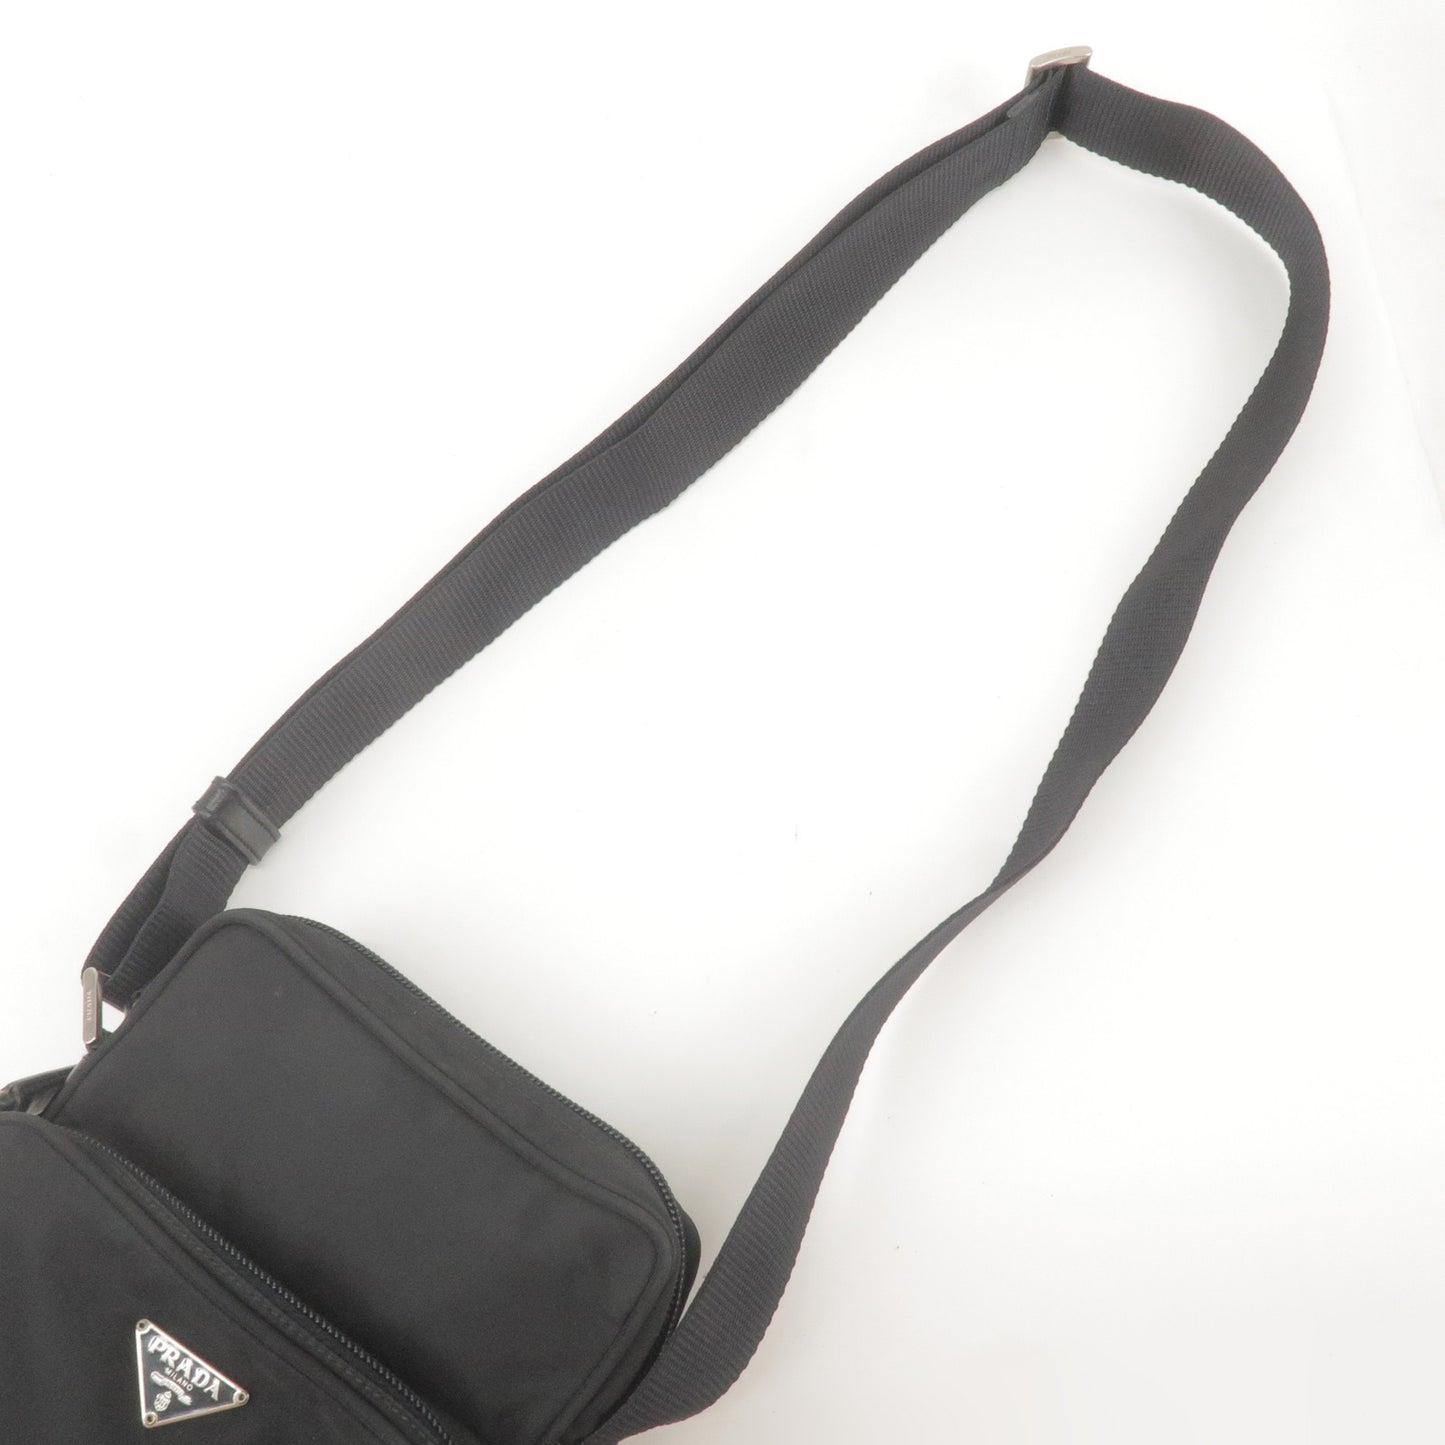 PRADA Logo Nylon Leather Shoulder Bag NERO Black BT0169